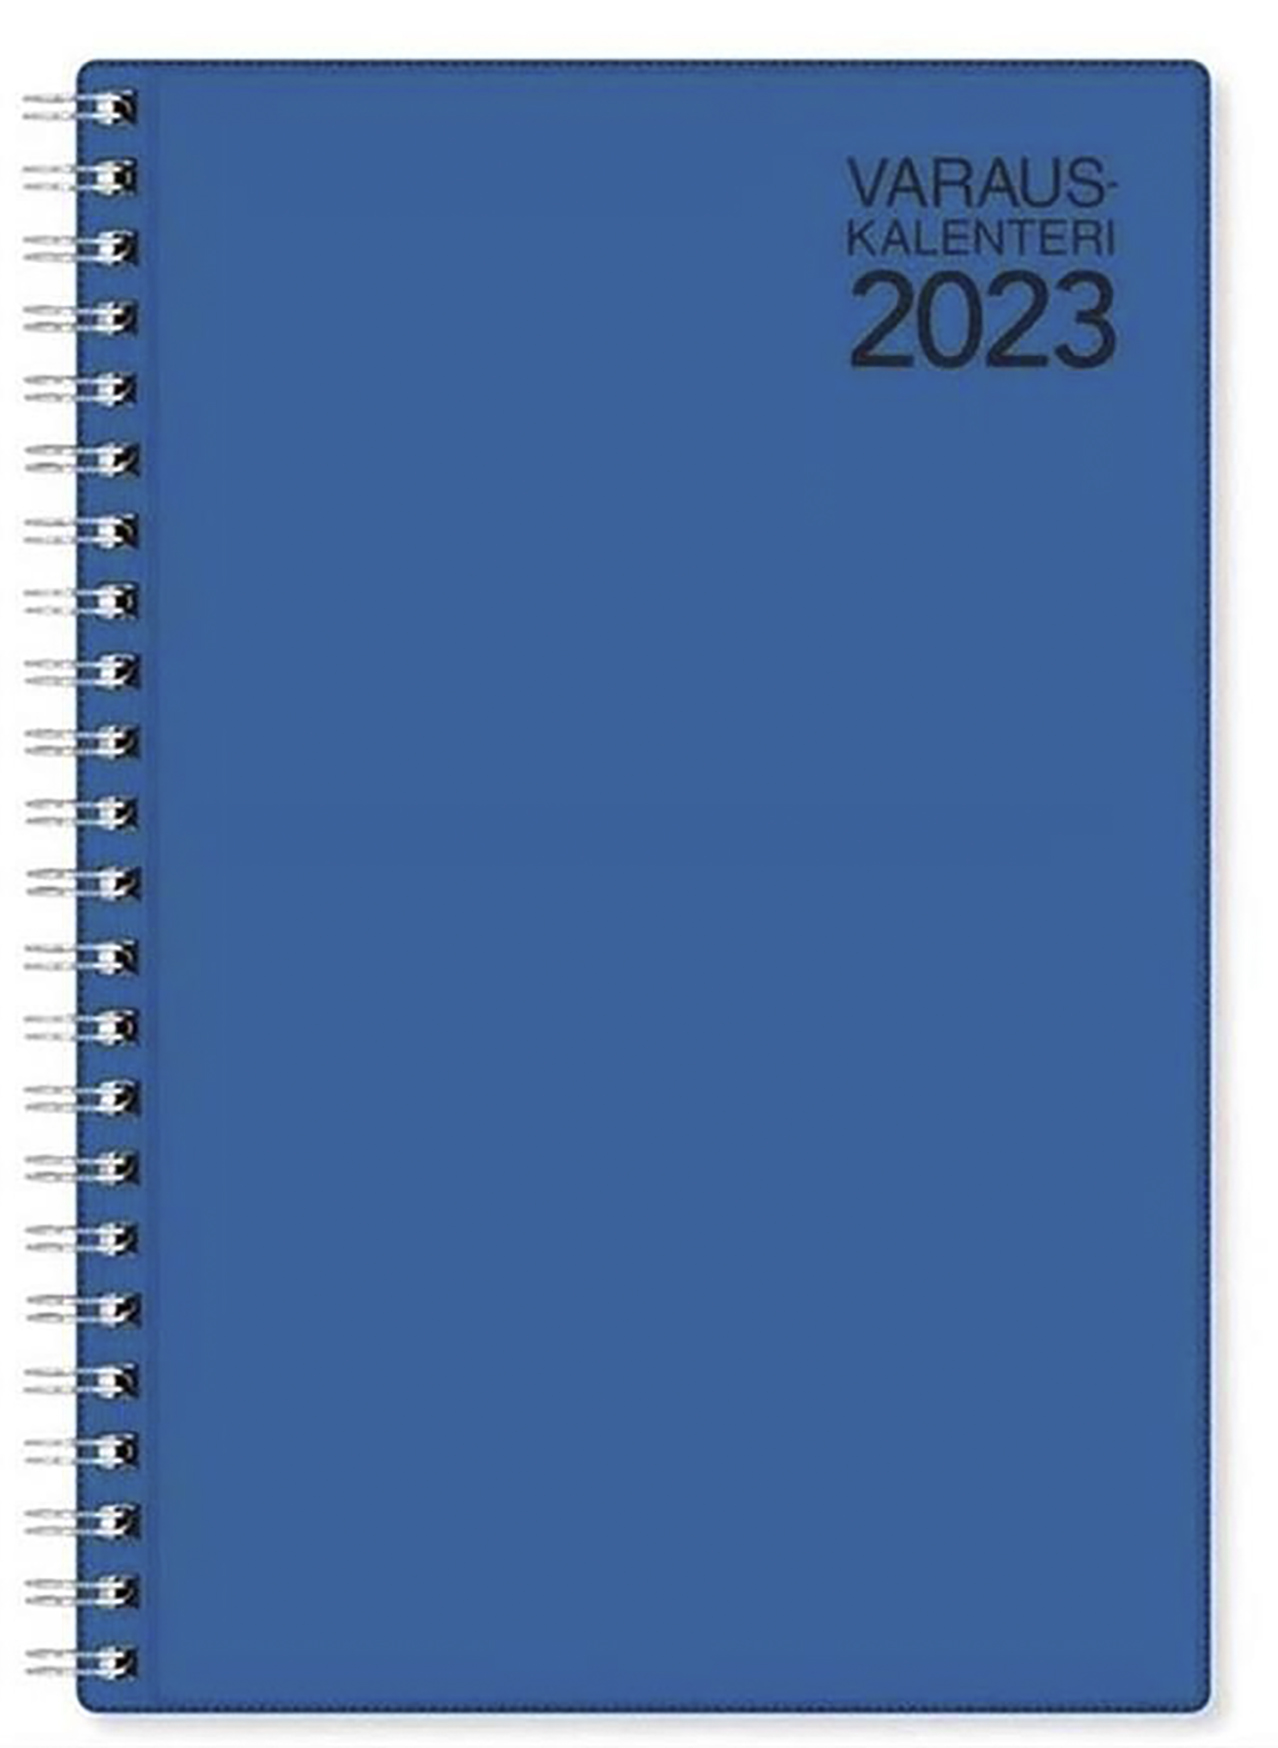 Varauskalenteri 2023 1